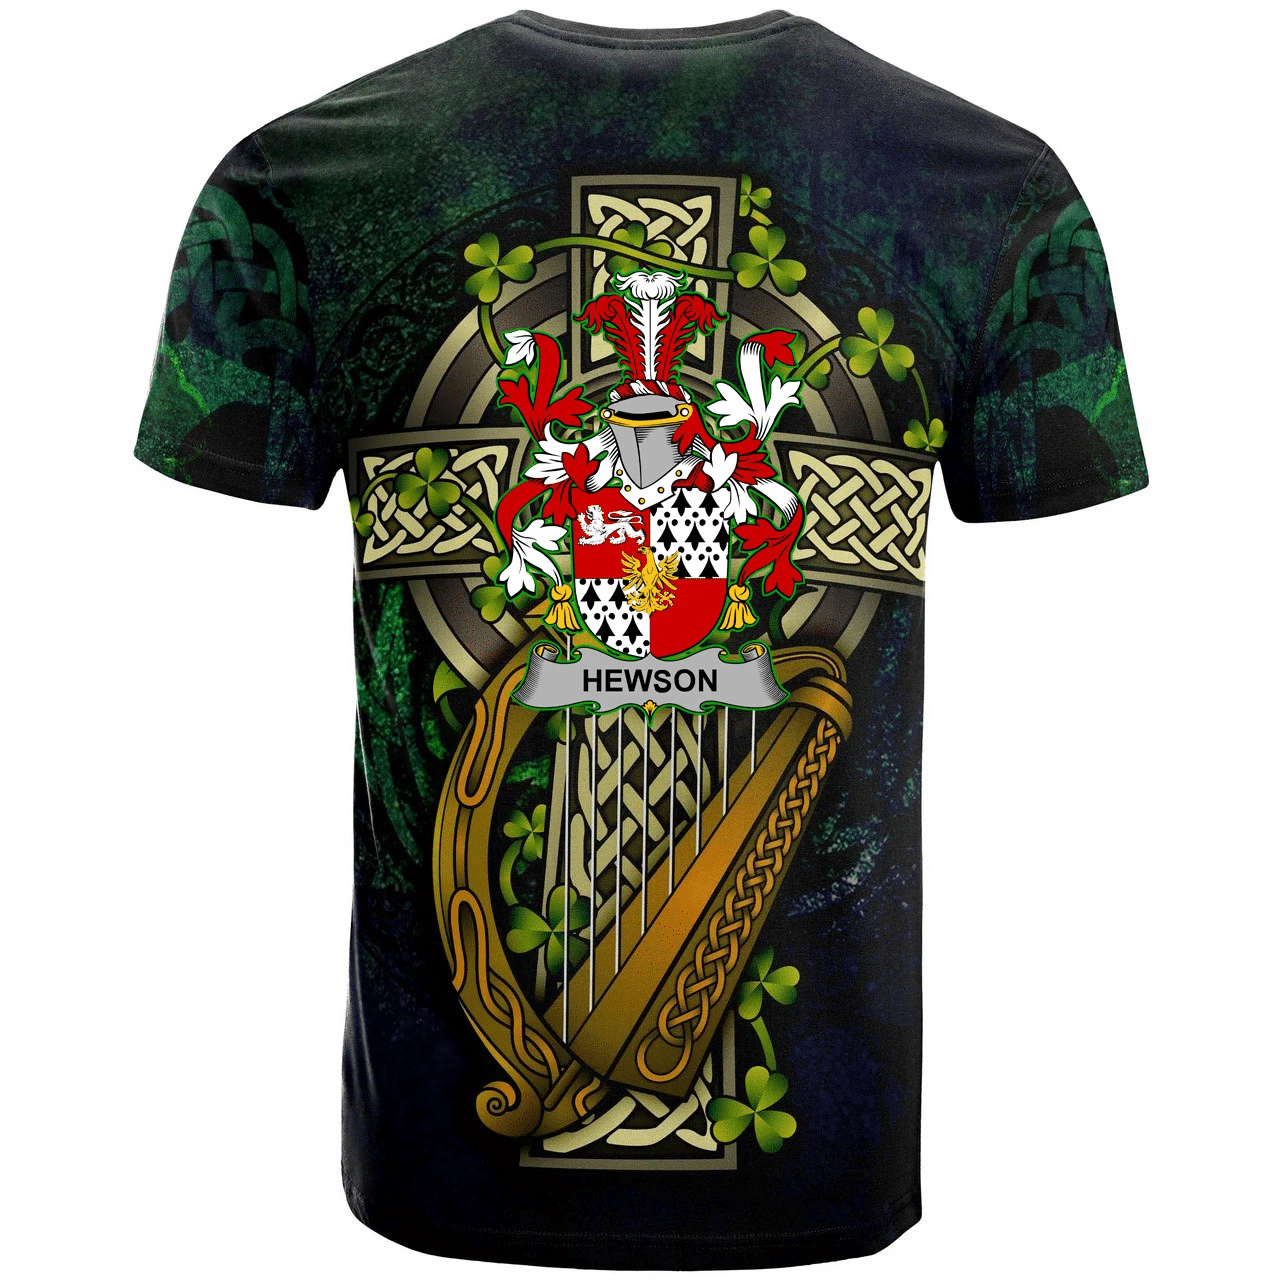 1stireland Ireland T-Shirt - Hewson Irish with Celtic Cross Tee - Irish Family Crest A7 | 1stScotland.com